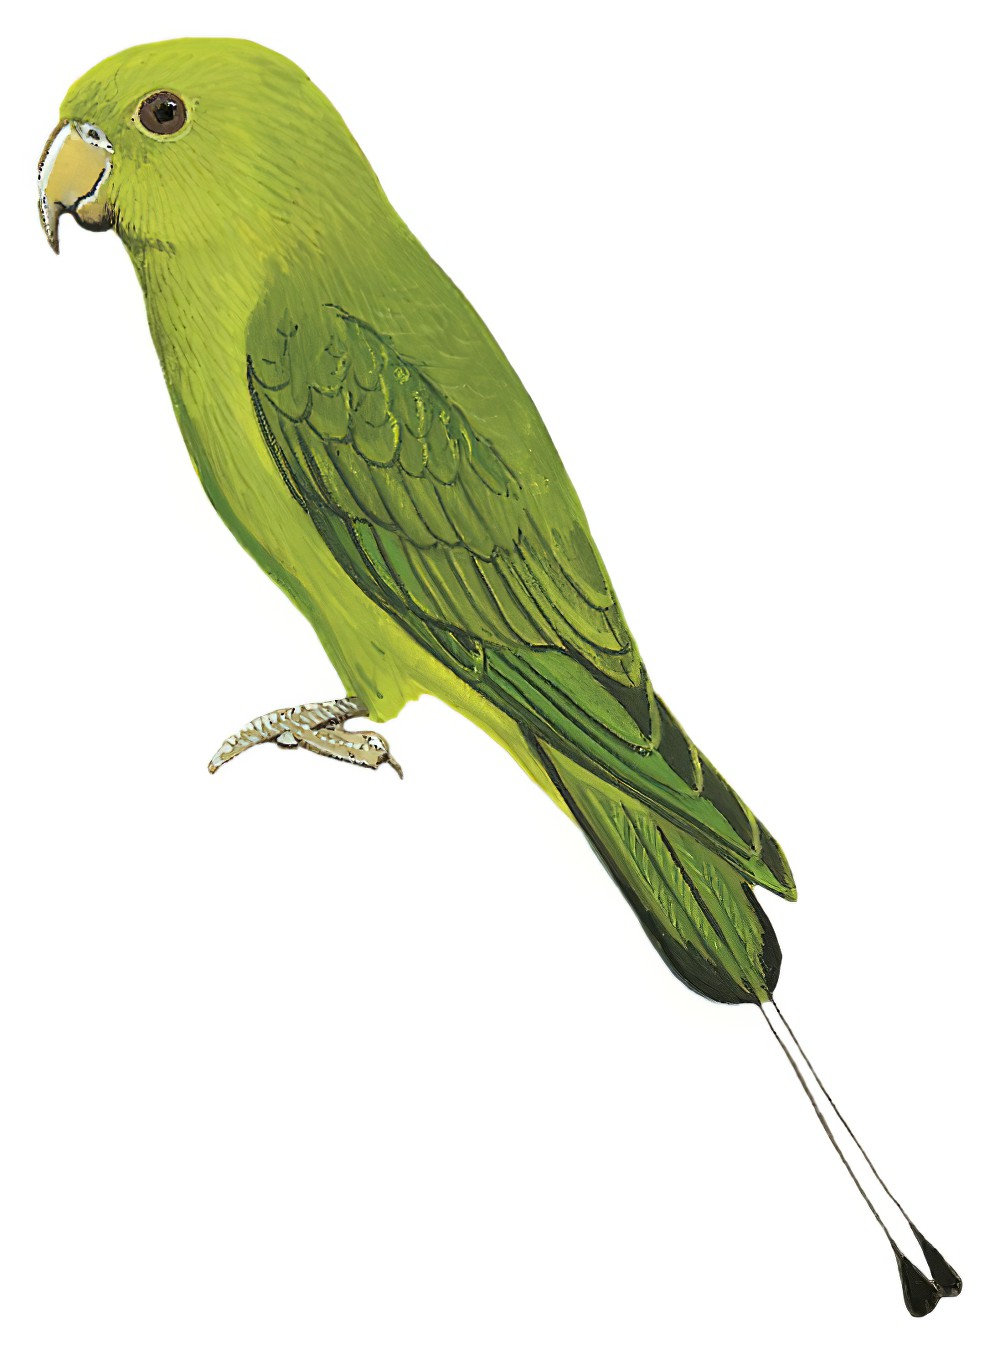 Green Racquet-tail / Prioniturus luconensis